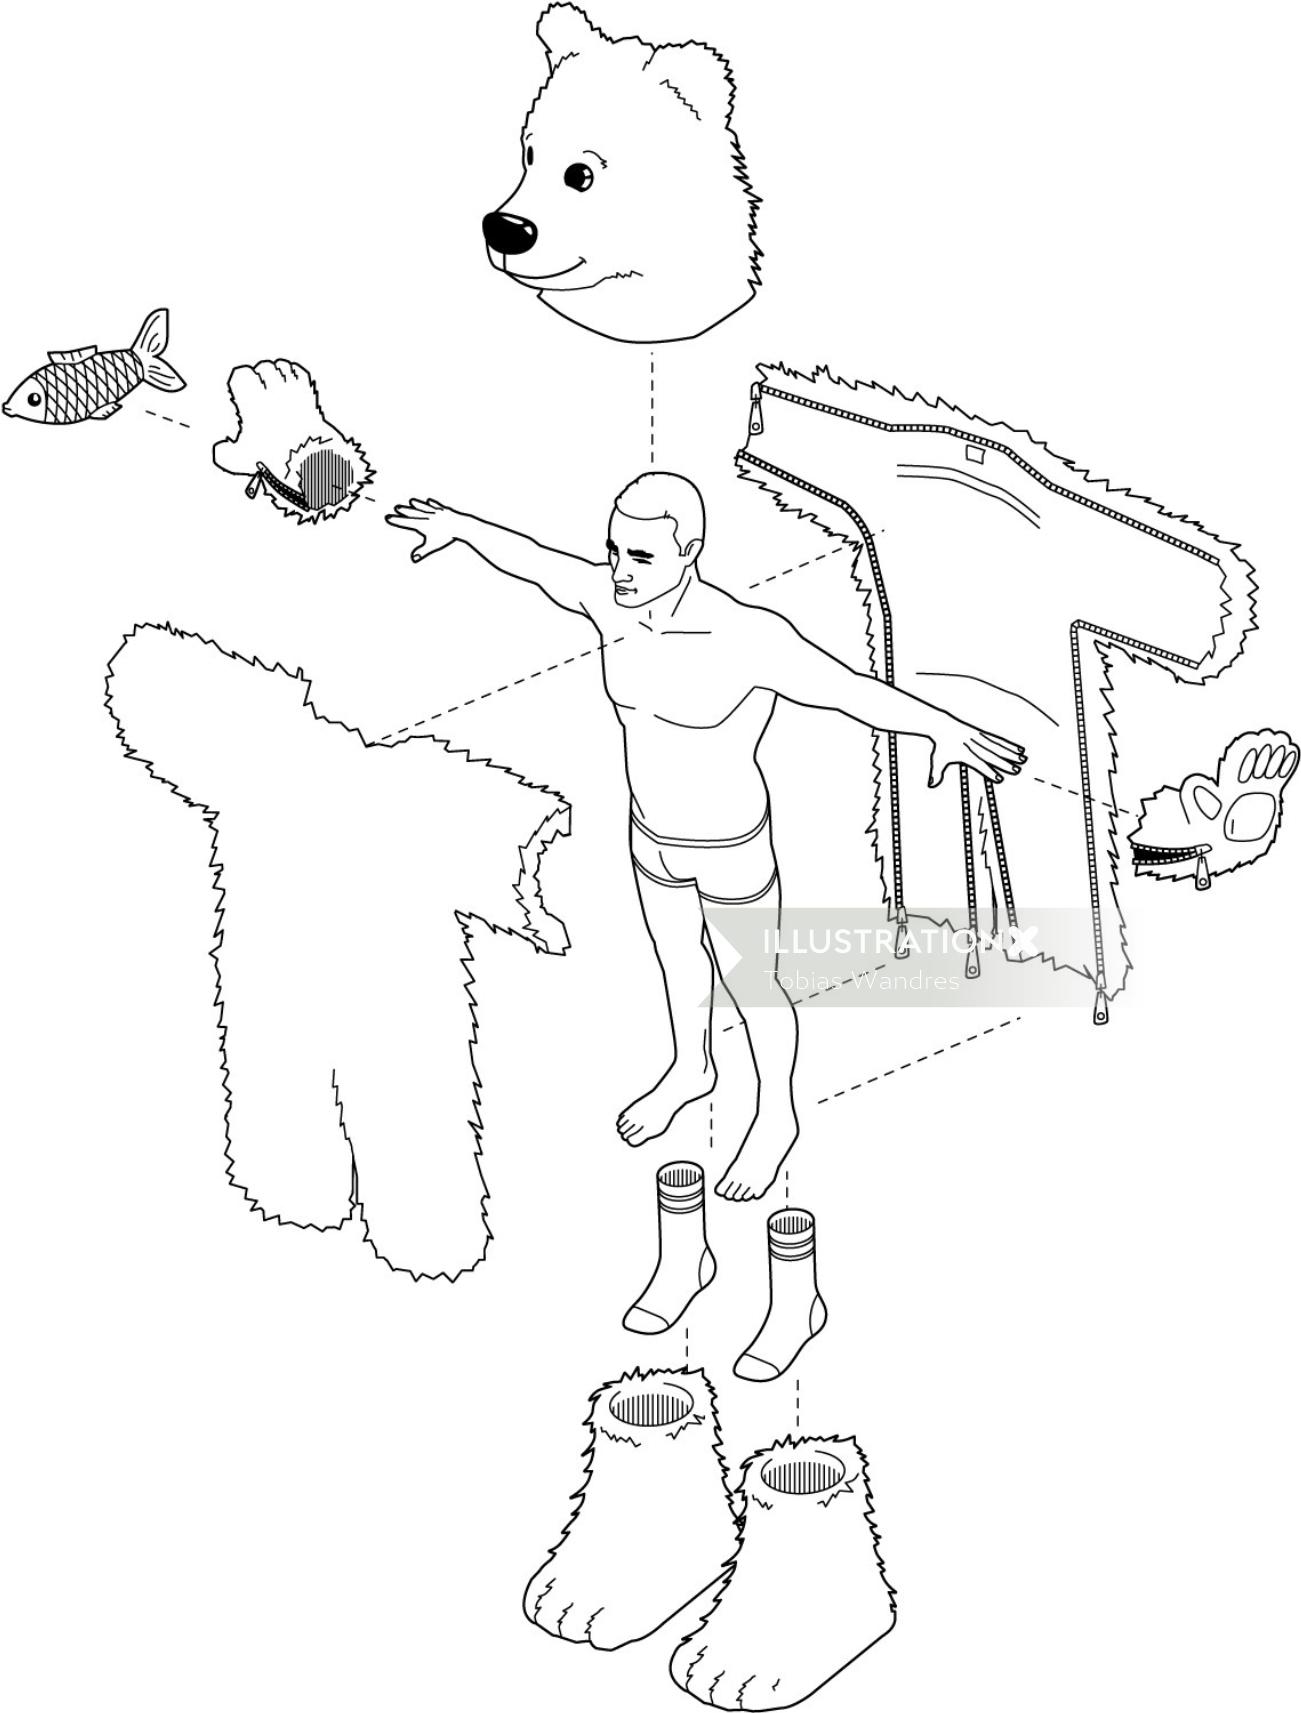 An illustration of exercising man